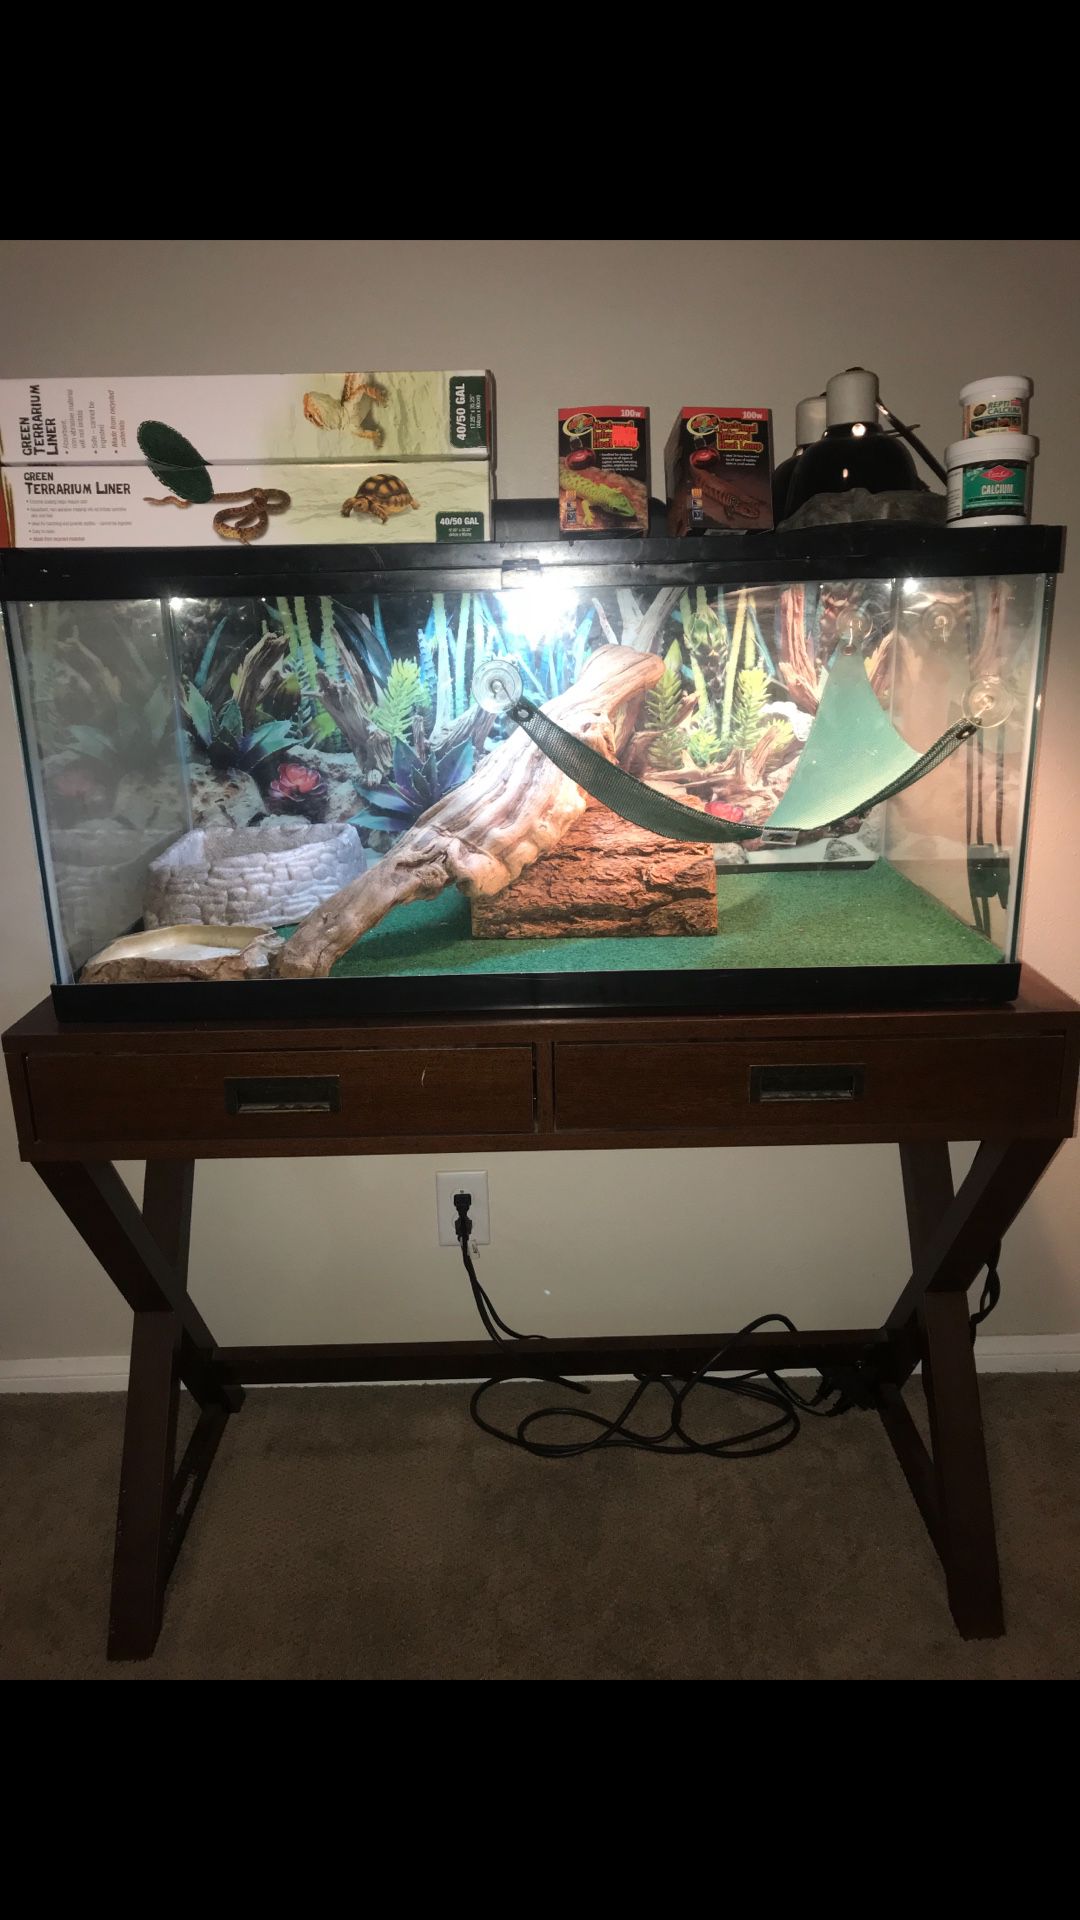 Fully ready reptile setup!